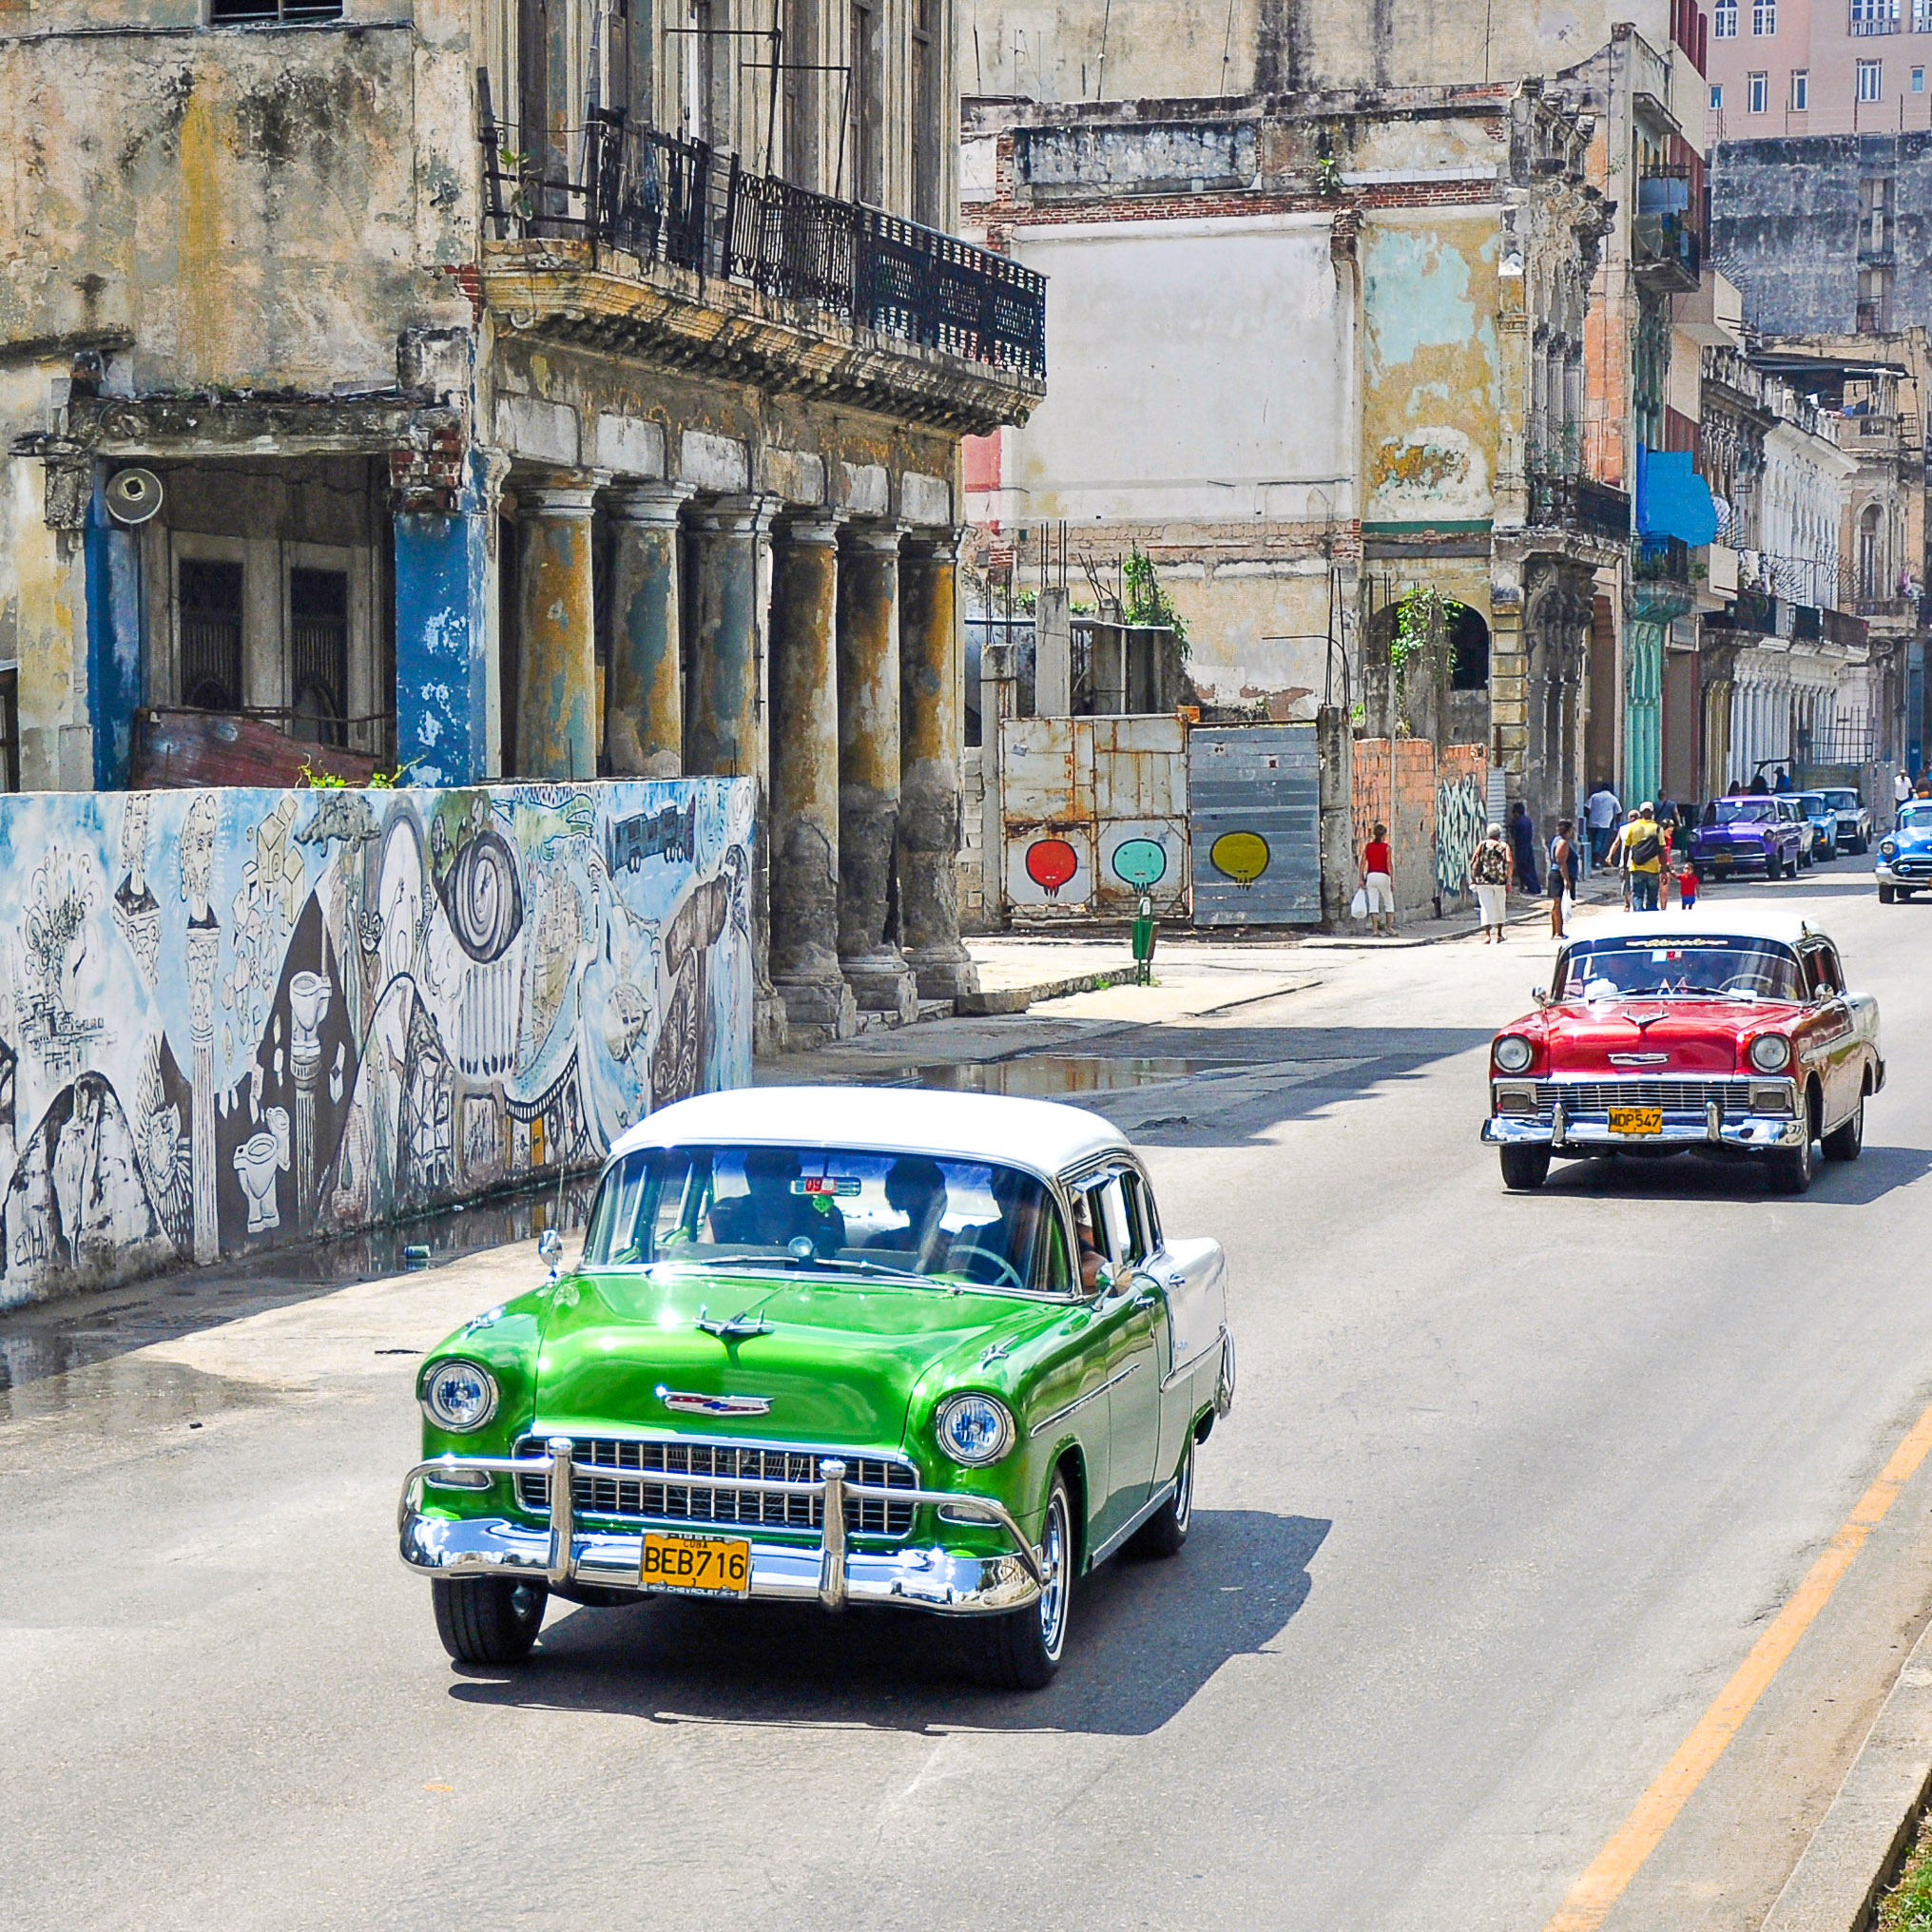 151214 Cuba Car Red Green-1283130602.jpg